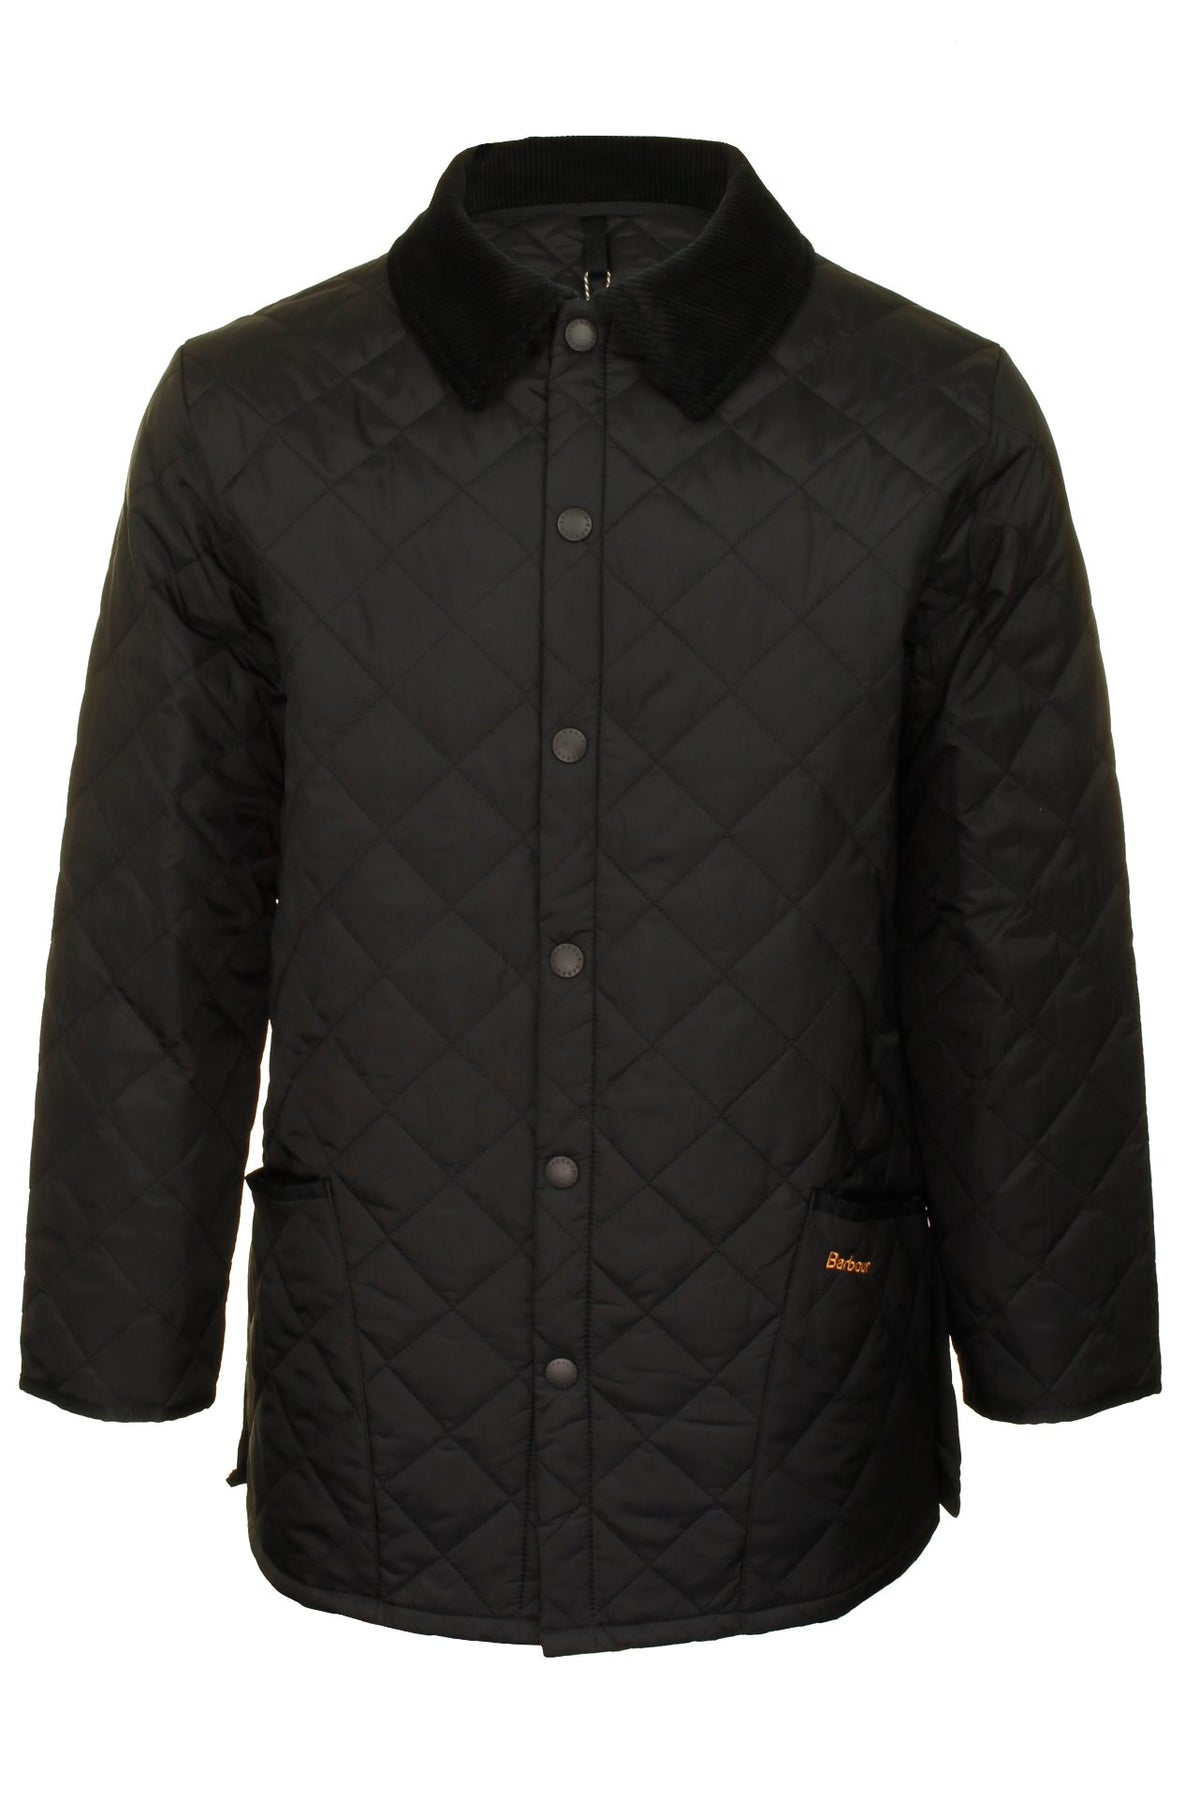 Barbour Men's Liddesdale Quilted Jacket, 01, Mqu0001, Black